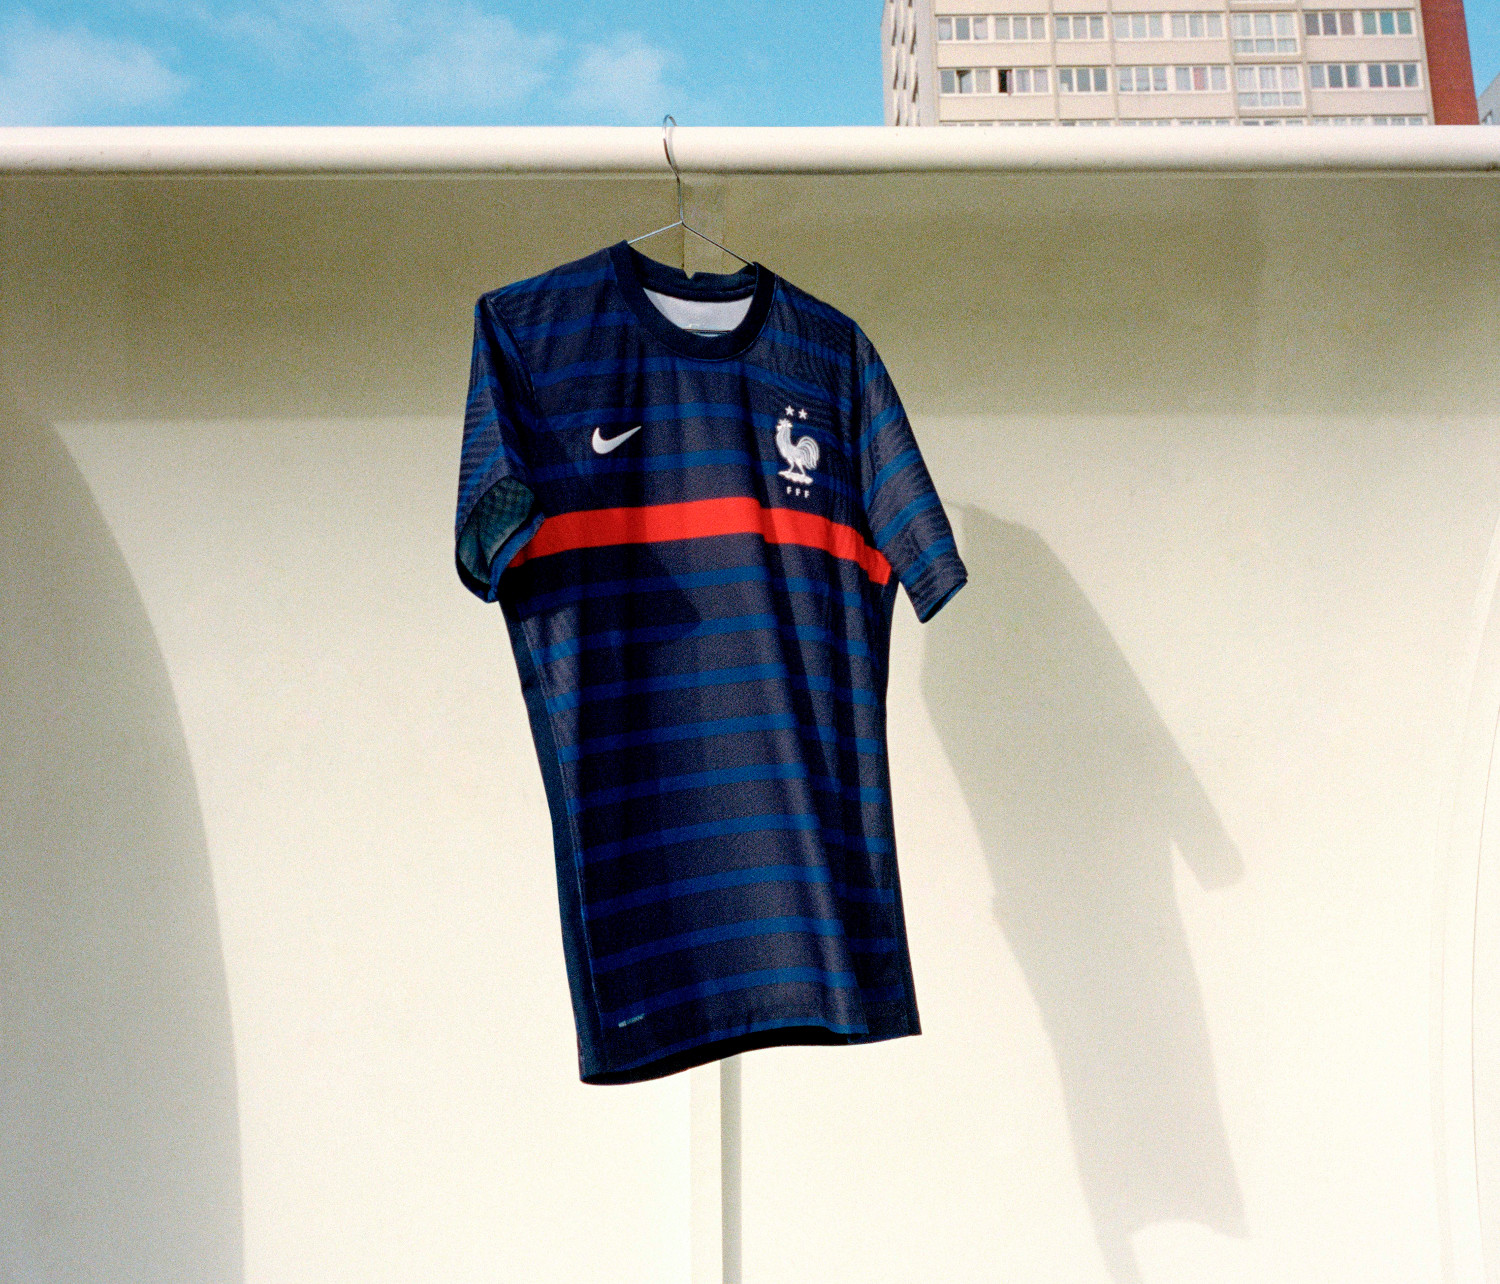 Frankrijk - Voetbalshirts.com